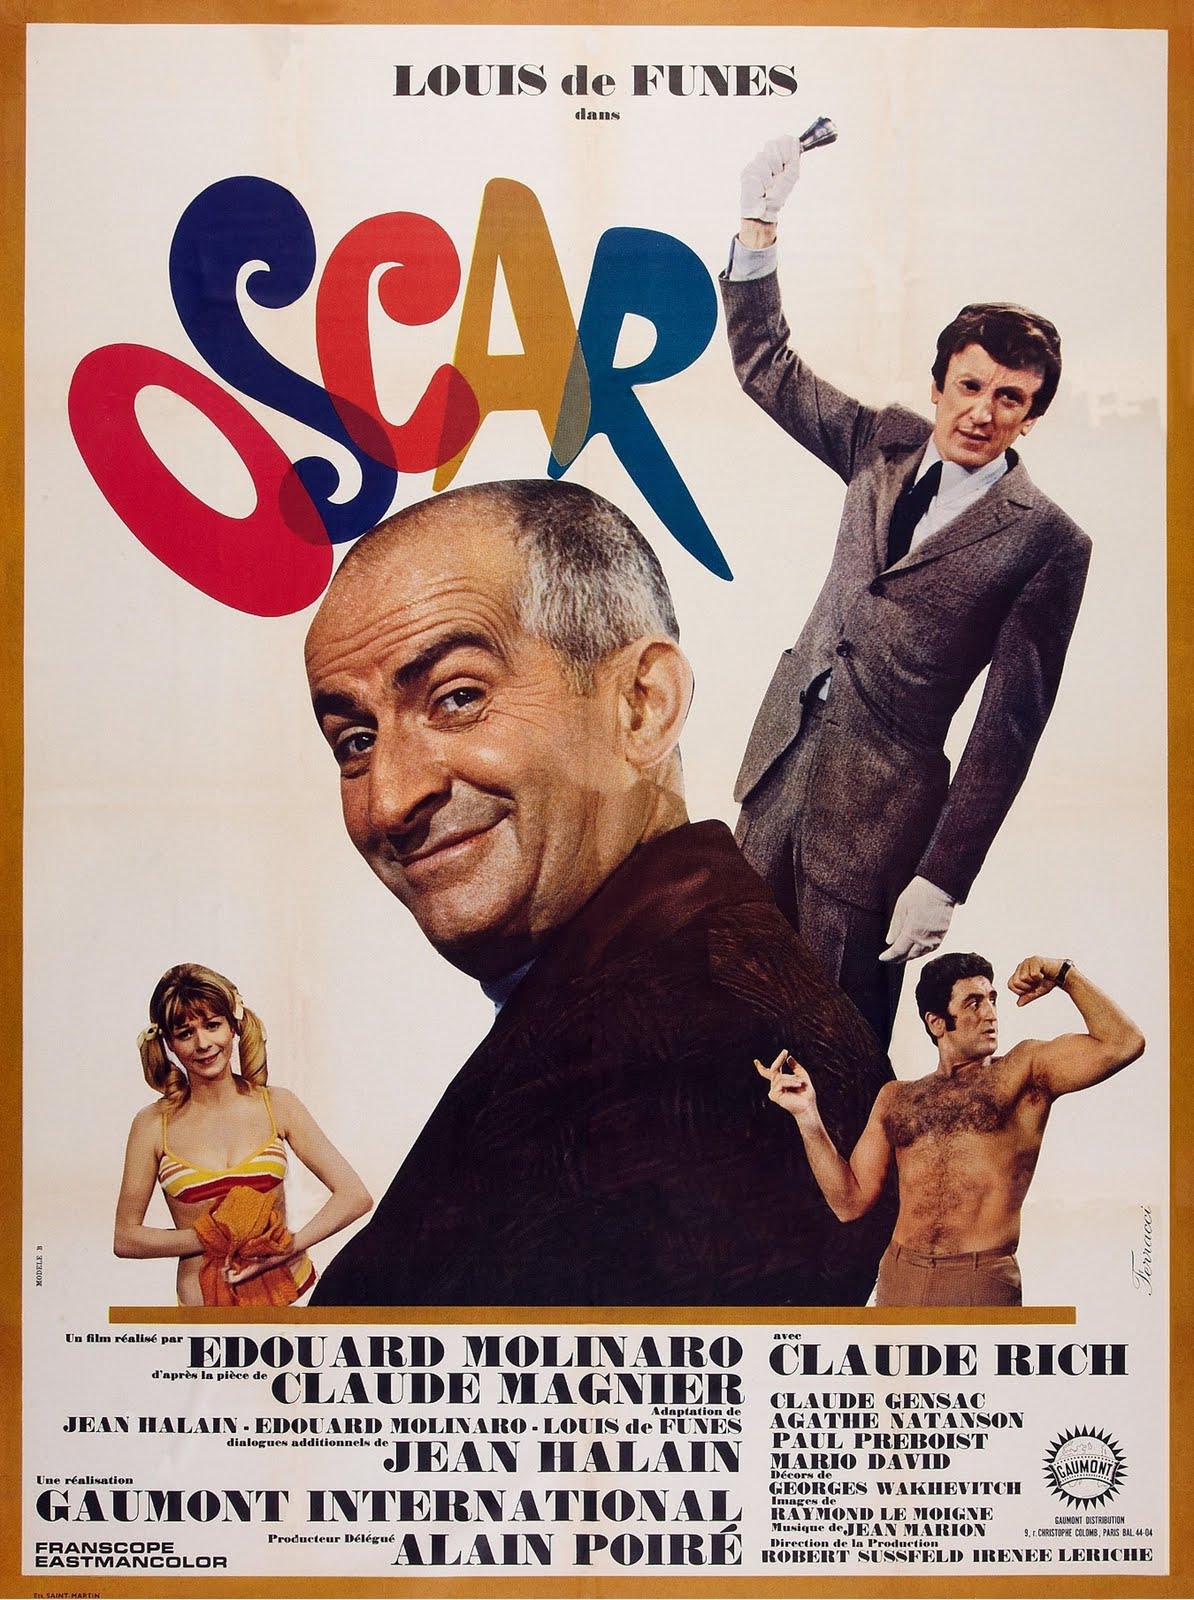 Stiahni si Filmy CZ/SK dabing Oskar / Oscar (1967)(CZ) = CSFD 81%